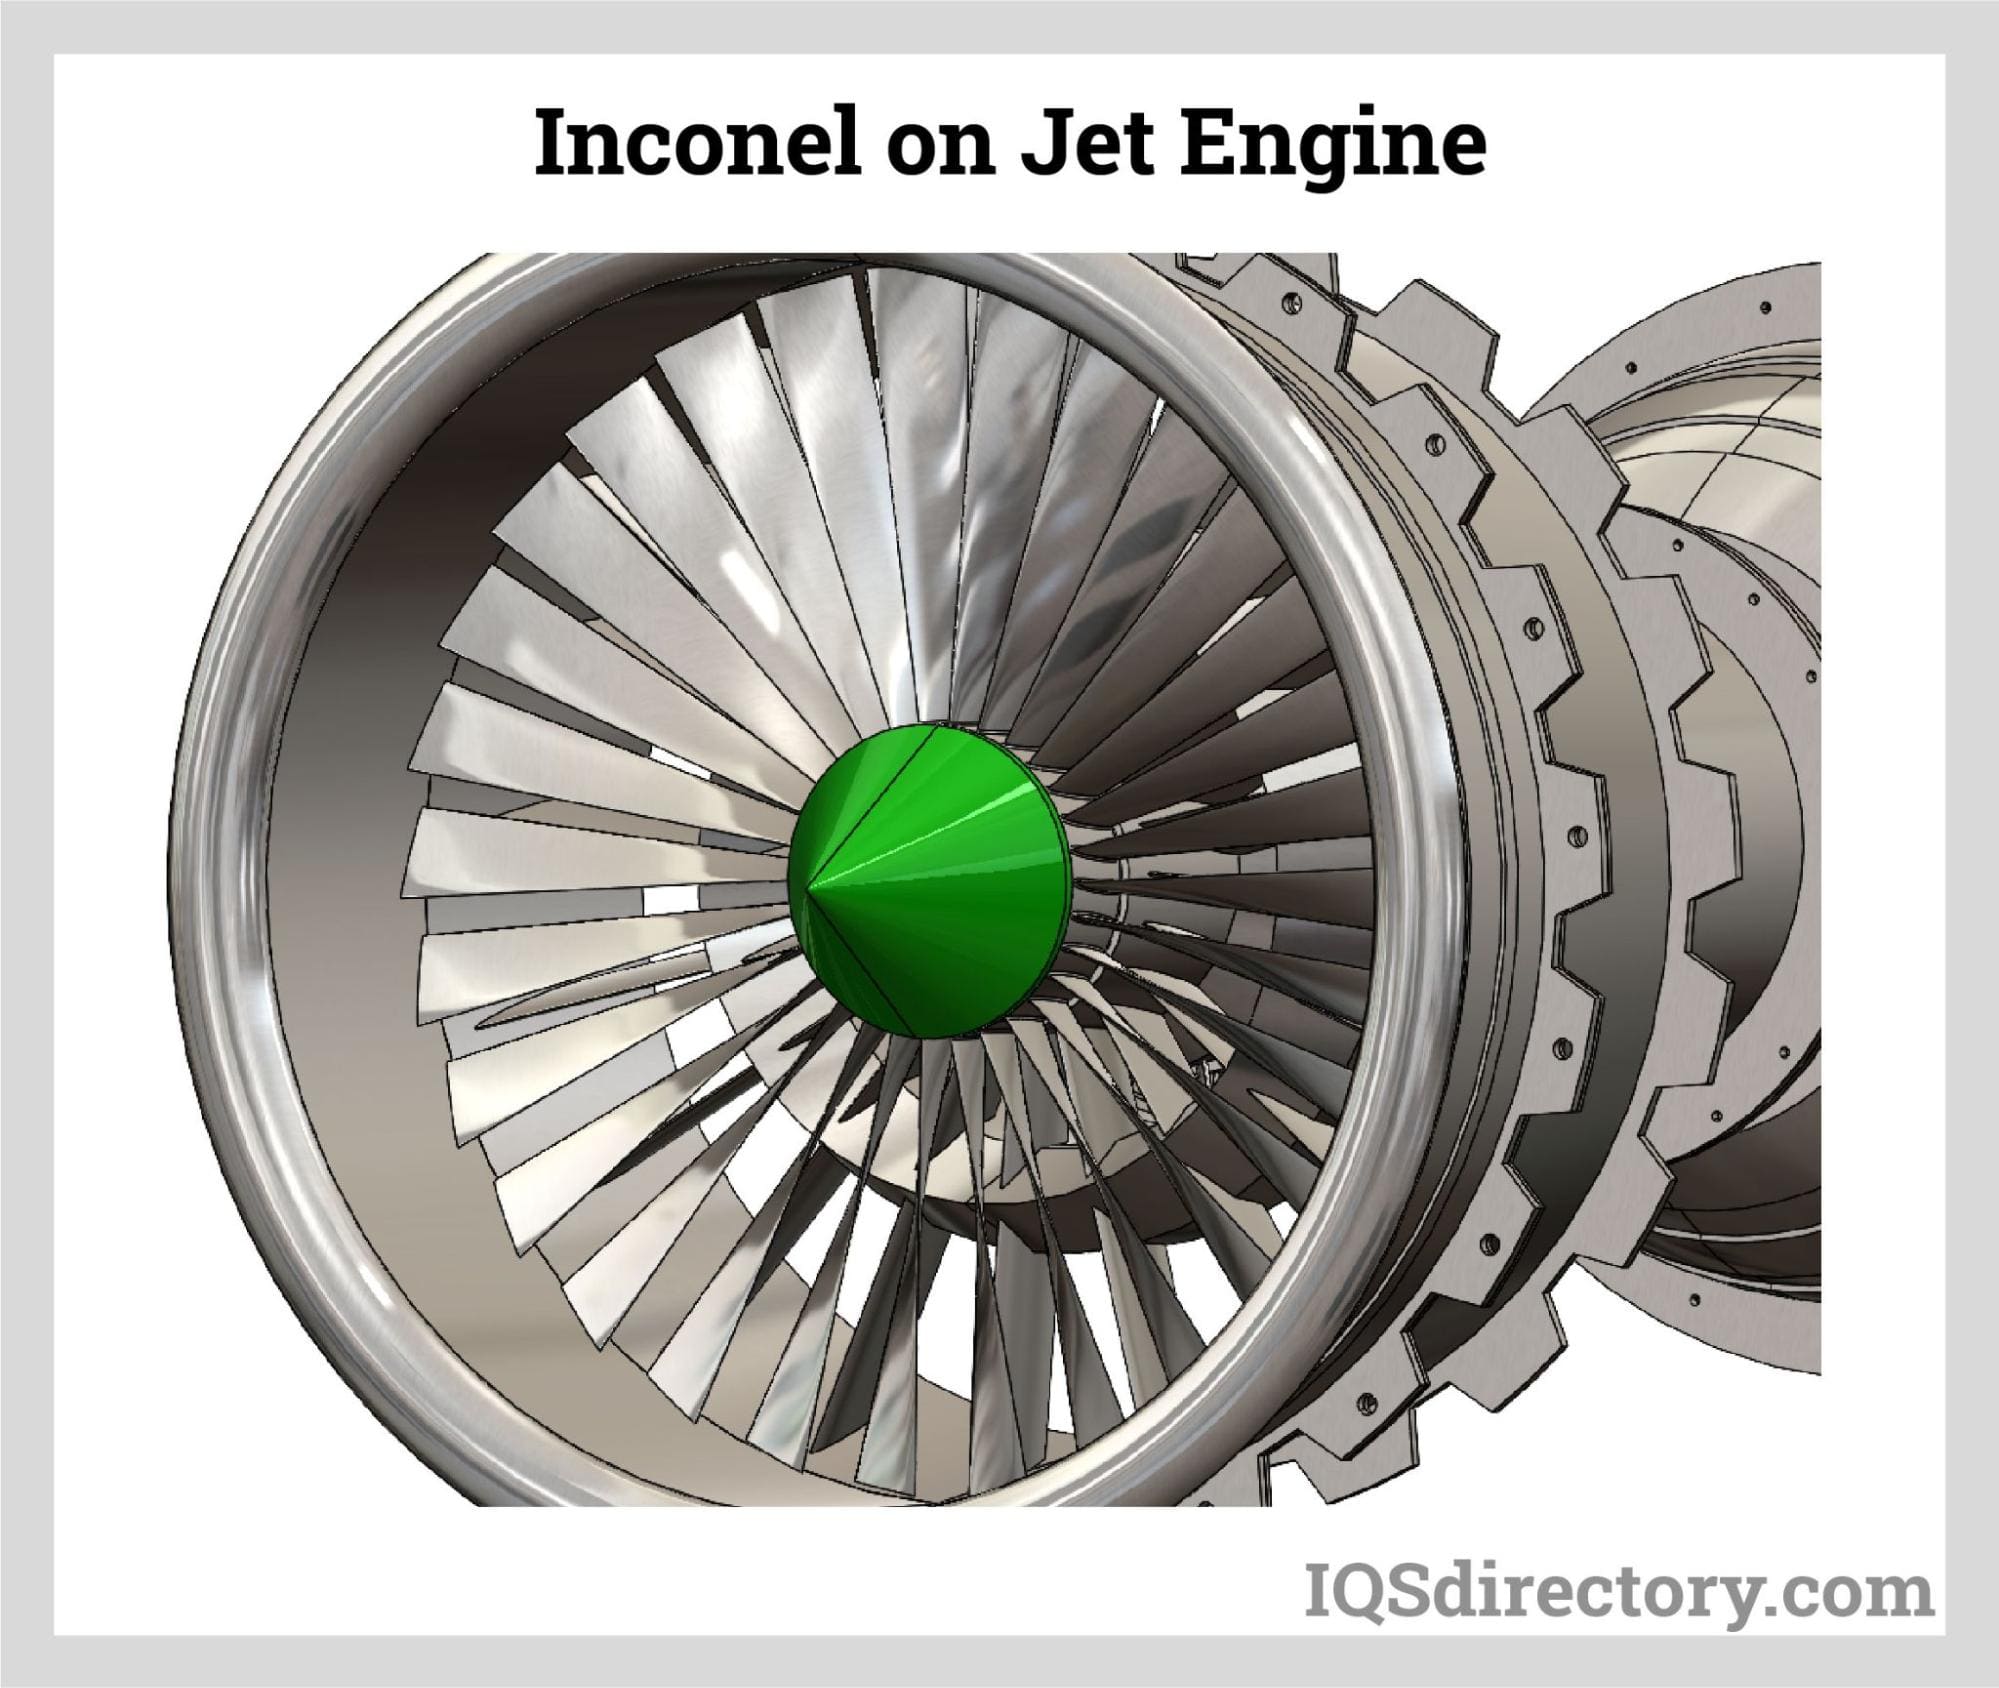 Inconel on Jet Engine